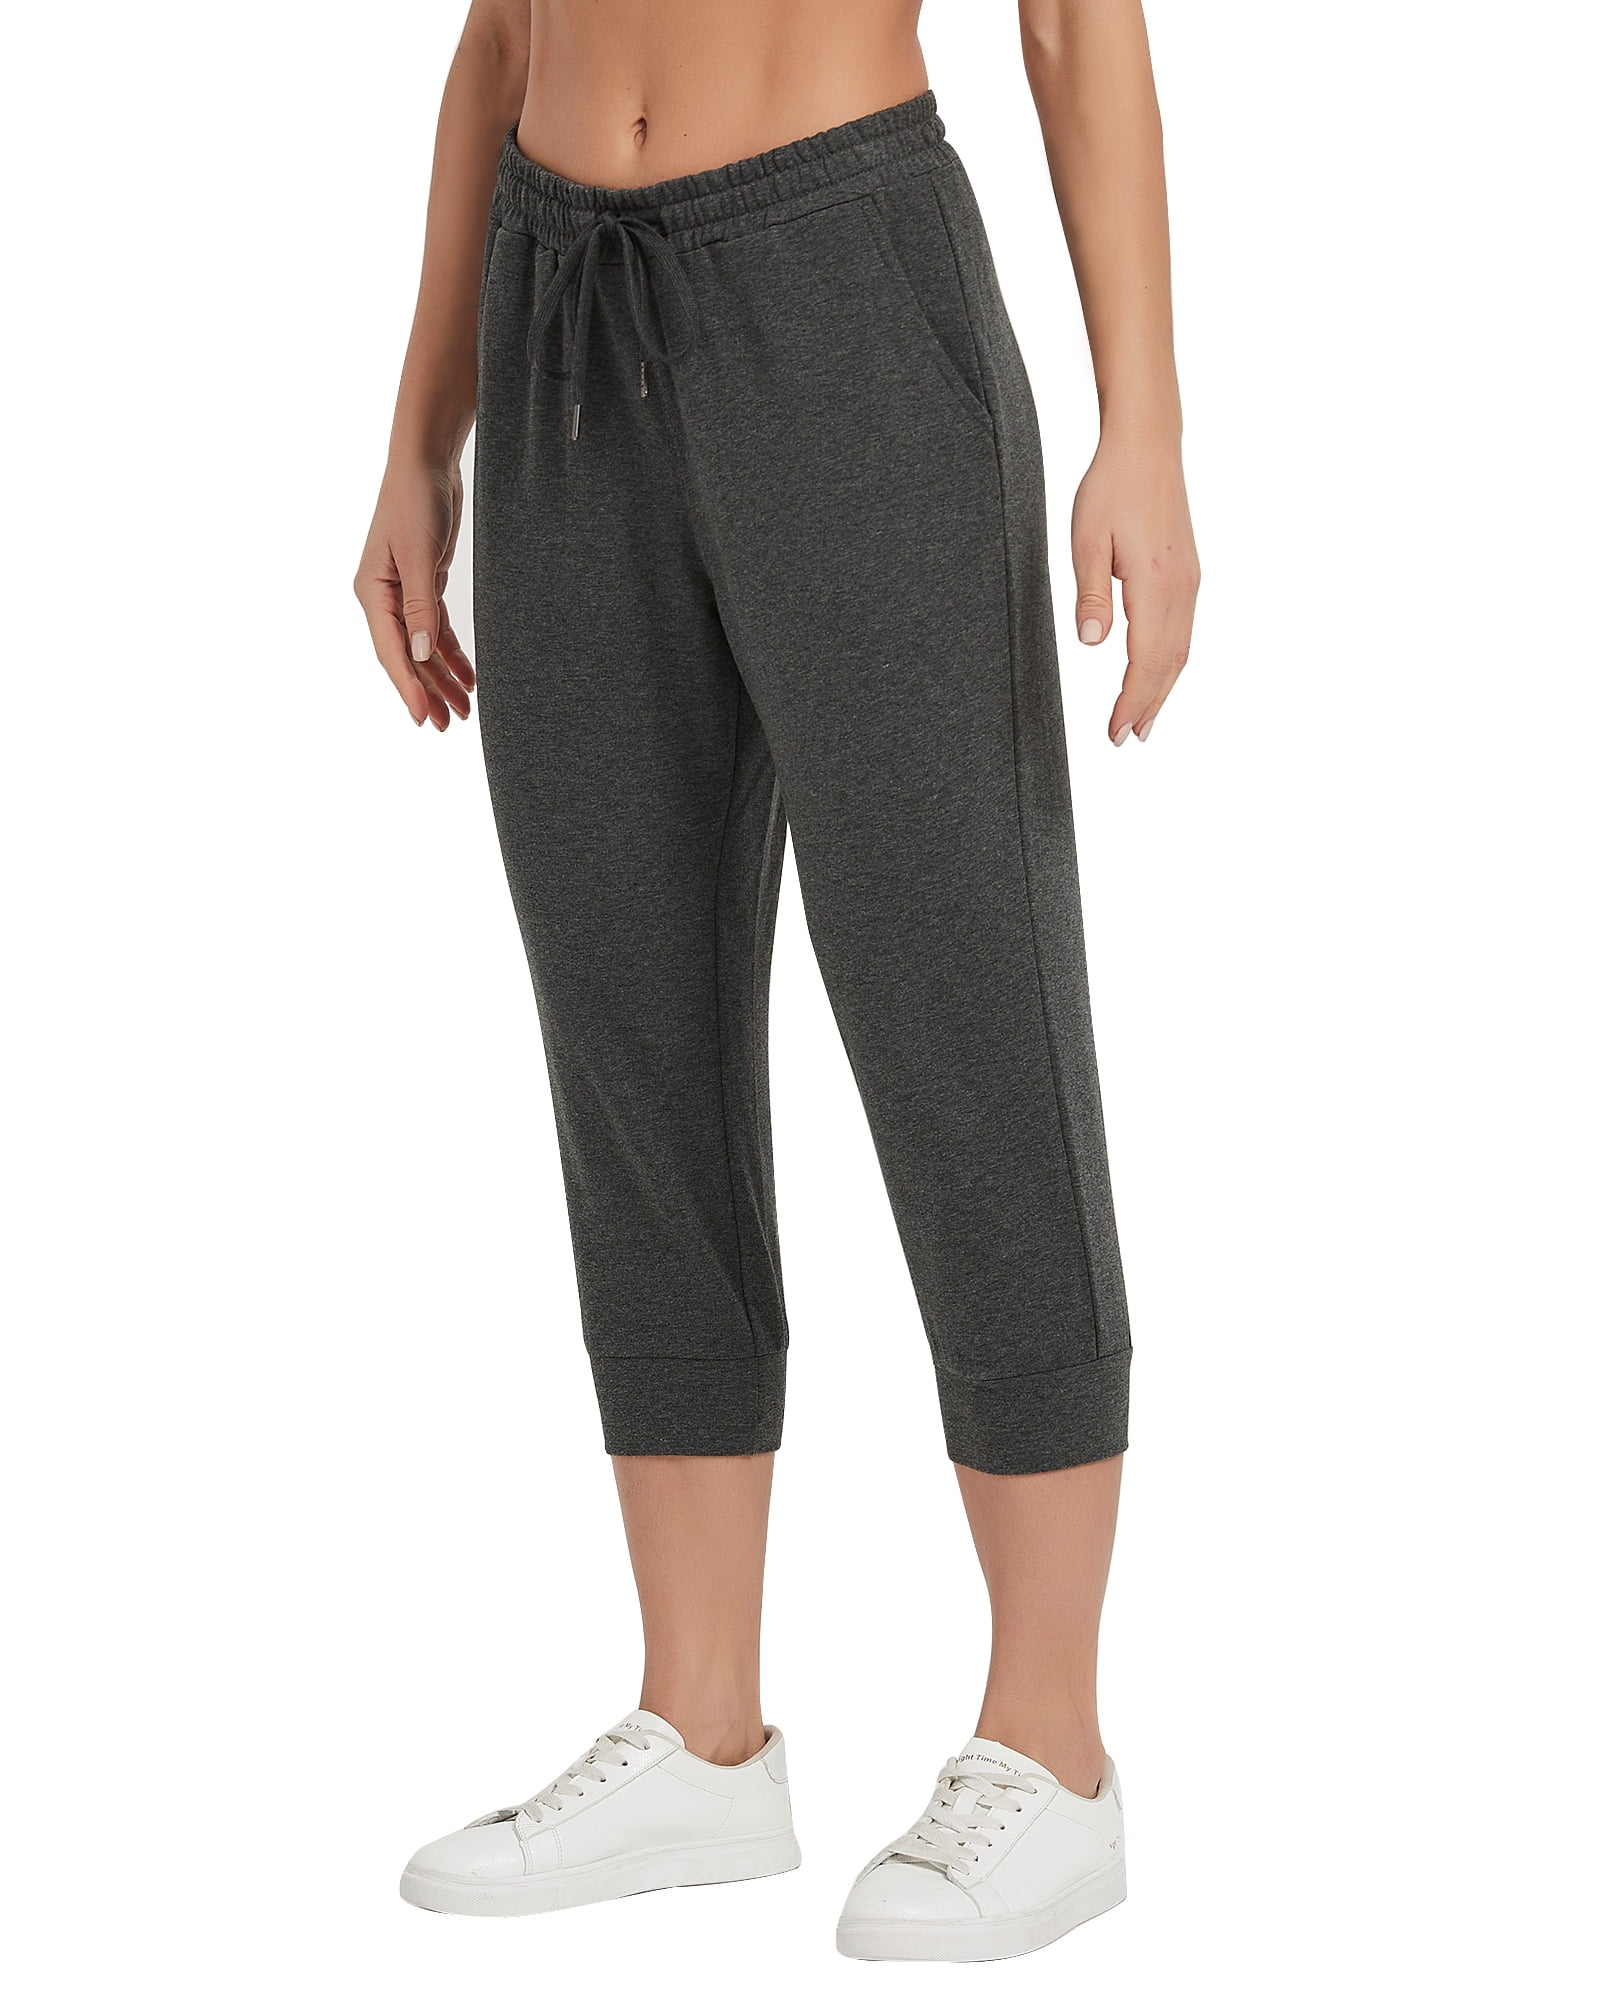 Stelle Women's Cotton Capri Joggers Pants with Side Pockets